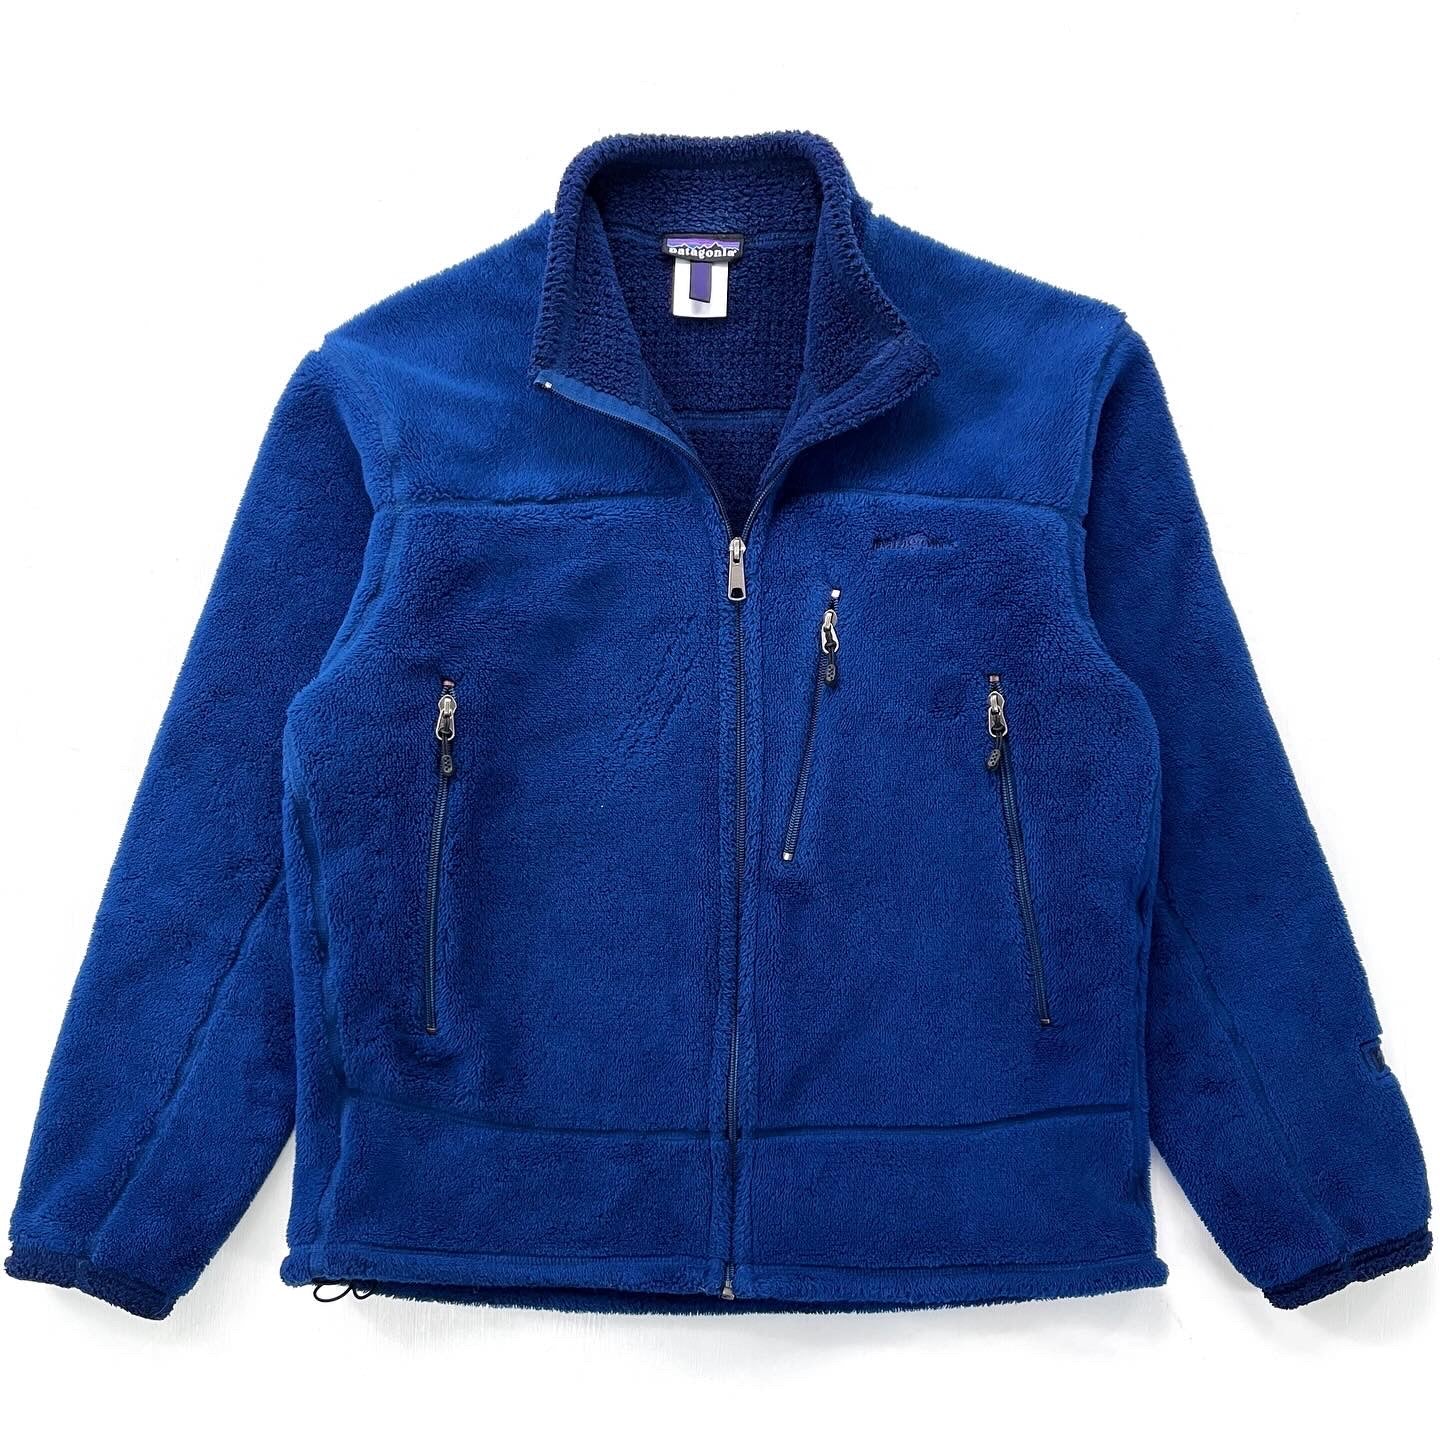 2004 Patagonia Mens R4 High-Pile Fleece Jacket, Deep Blue (M)